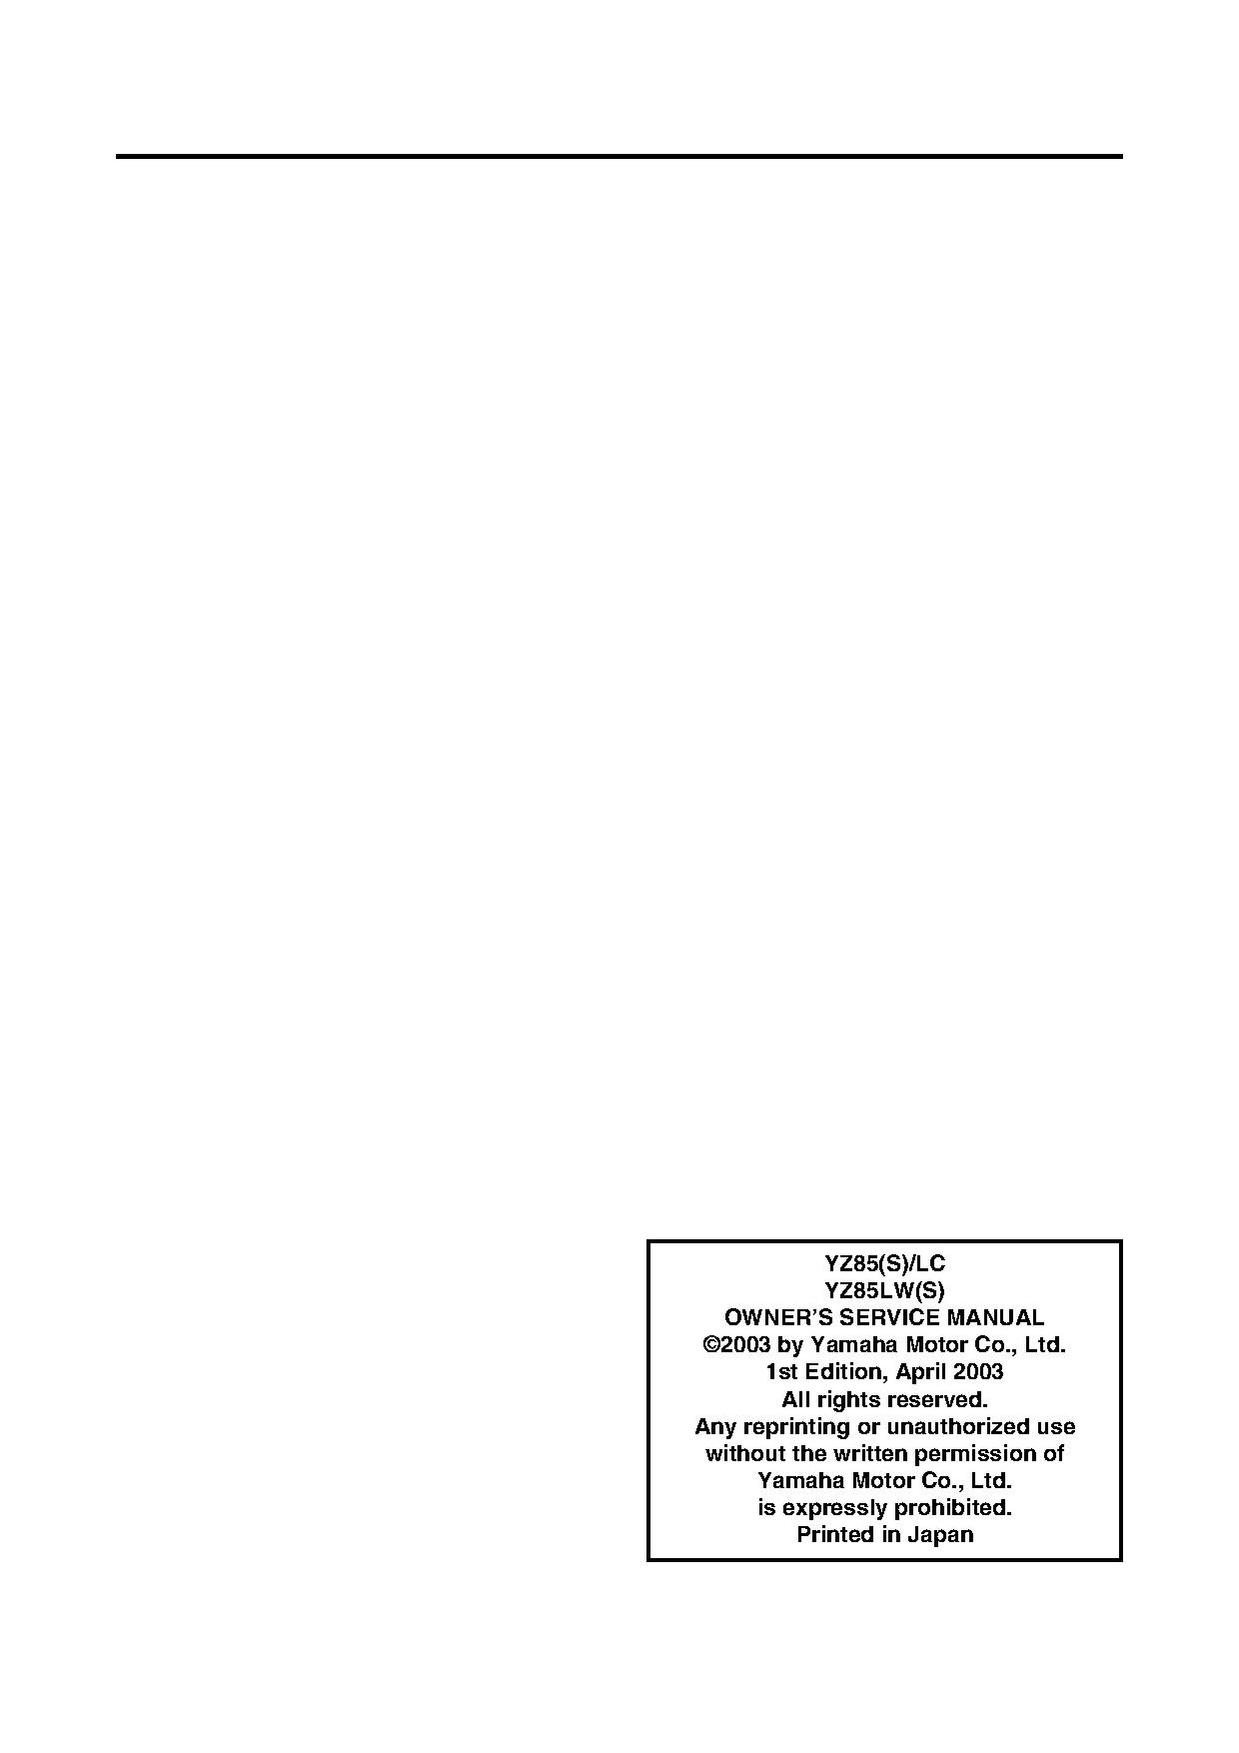 File:2004 Yamaha YZ85 Owners Service Manual.pdf